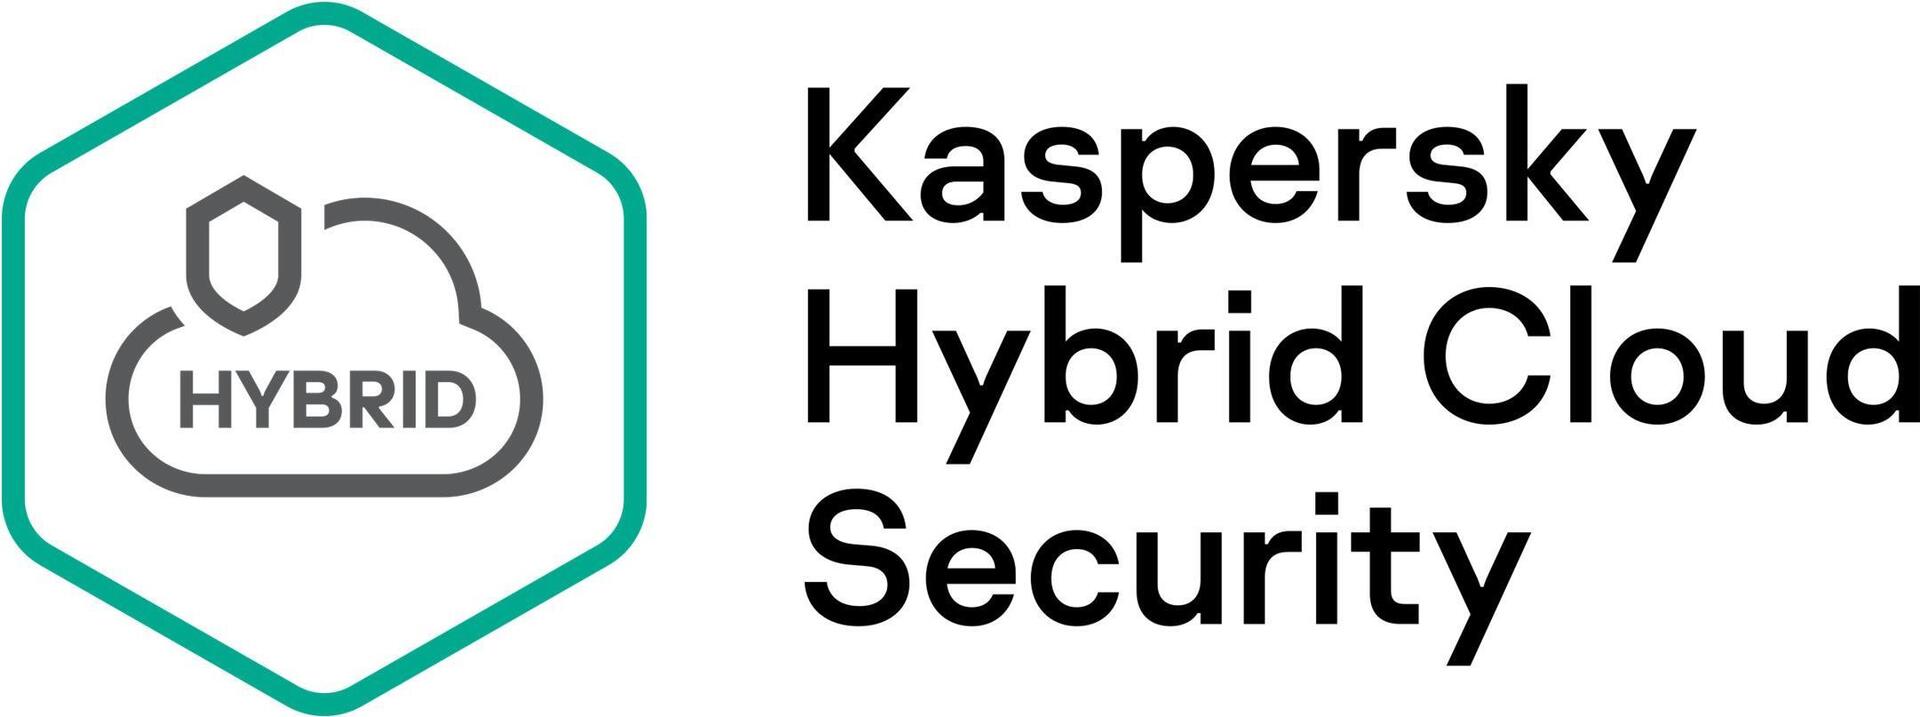 Kaspersky Hybrid Cloud Security Enterprise CPU European Edi. 50-99 CPU 3-Year Renewal License (KL4553XAQTR)